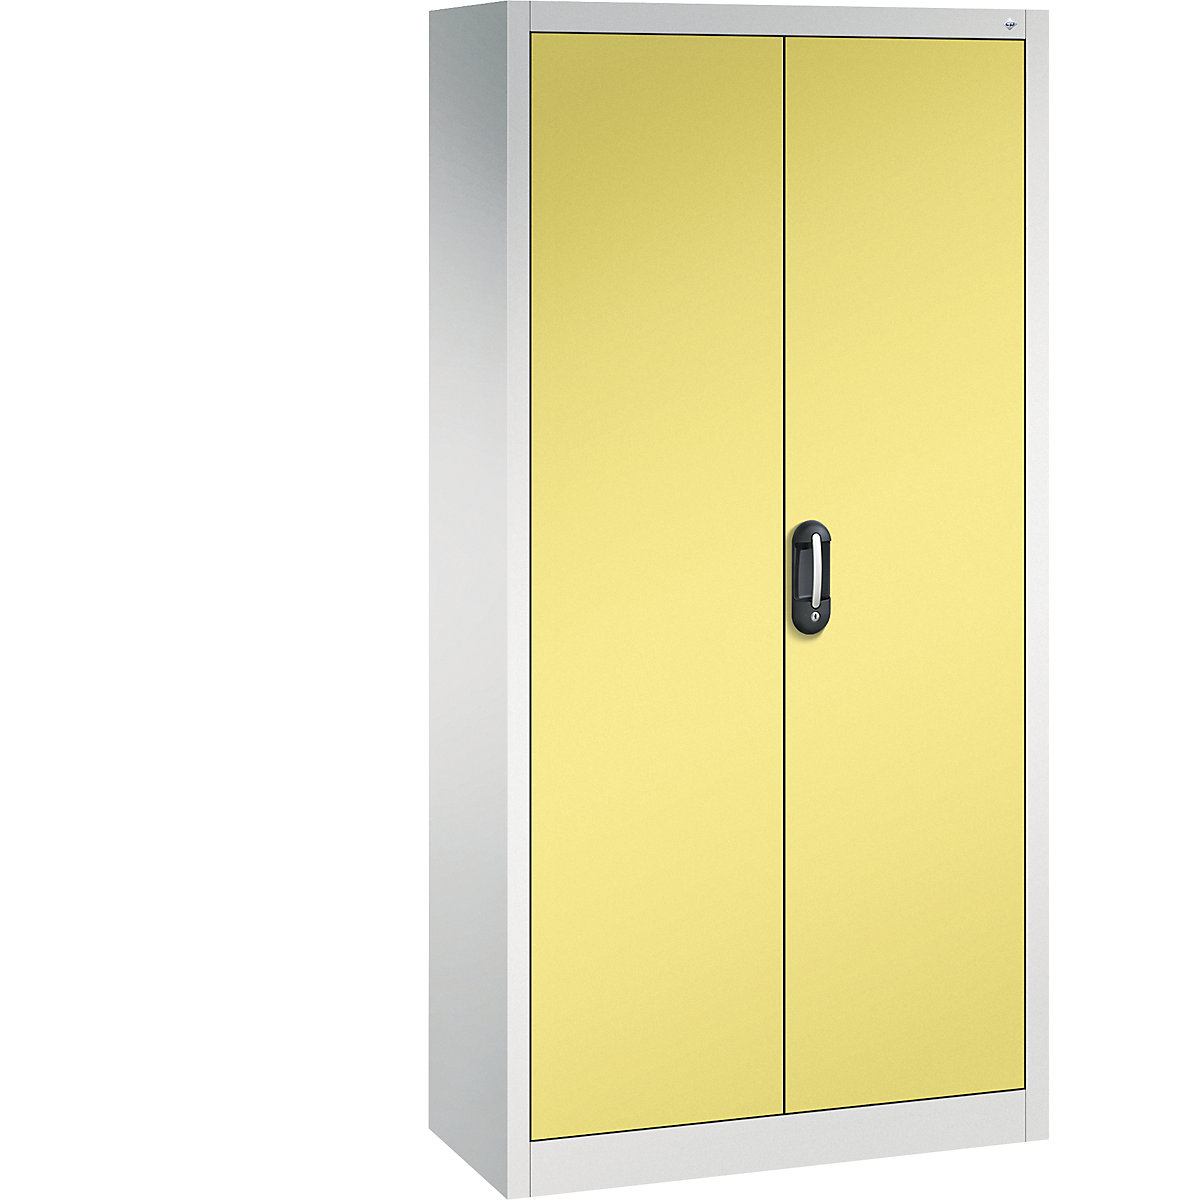 ACURADO universal cupboard – C+P, WxD 930 x 400 mm, light grey / sulphur yellow-10